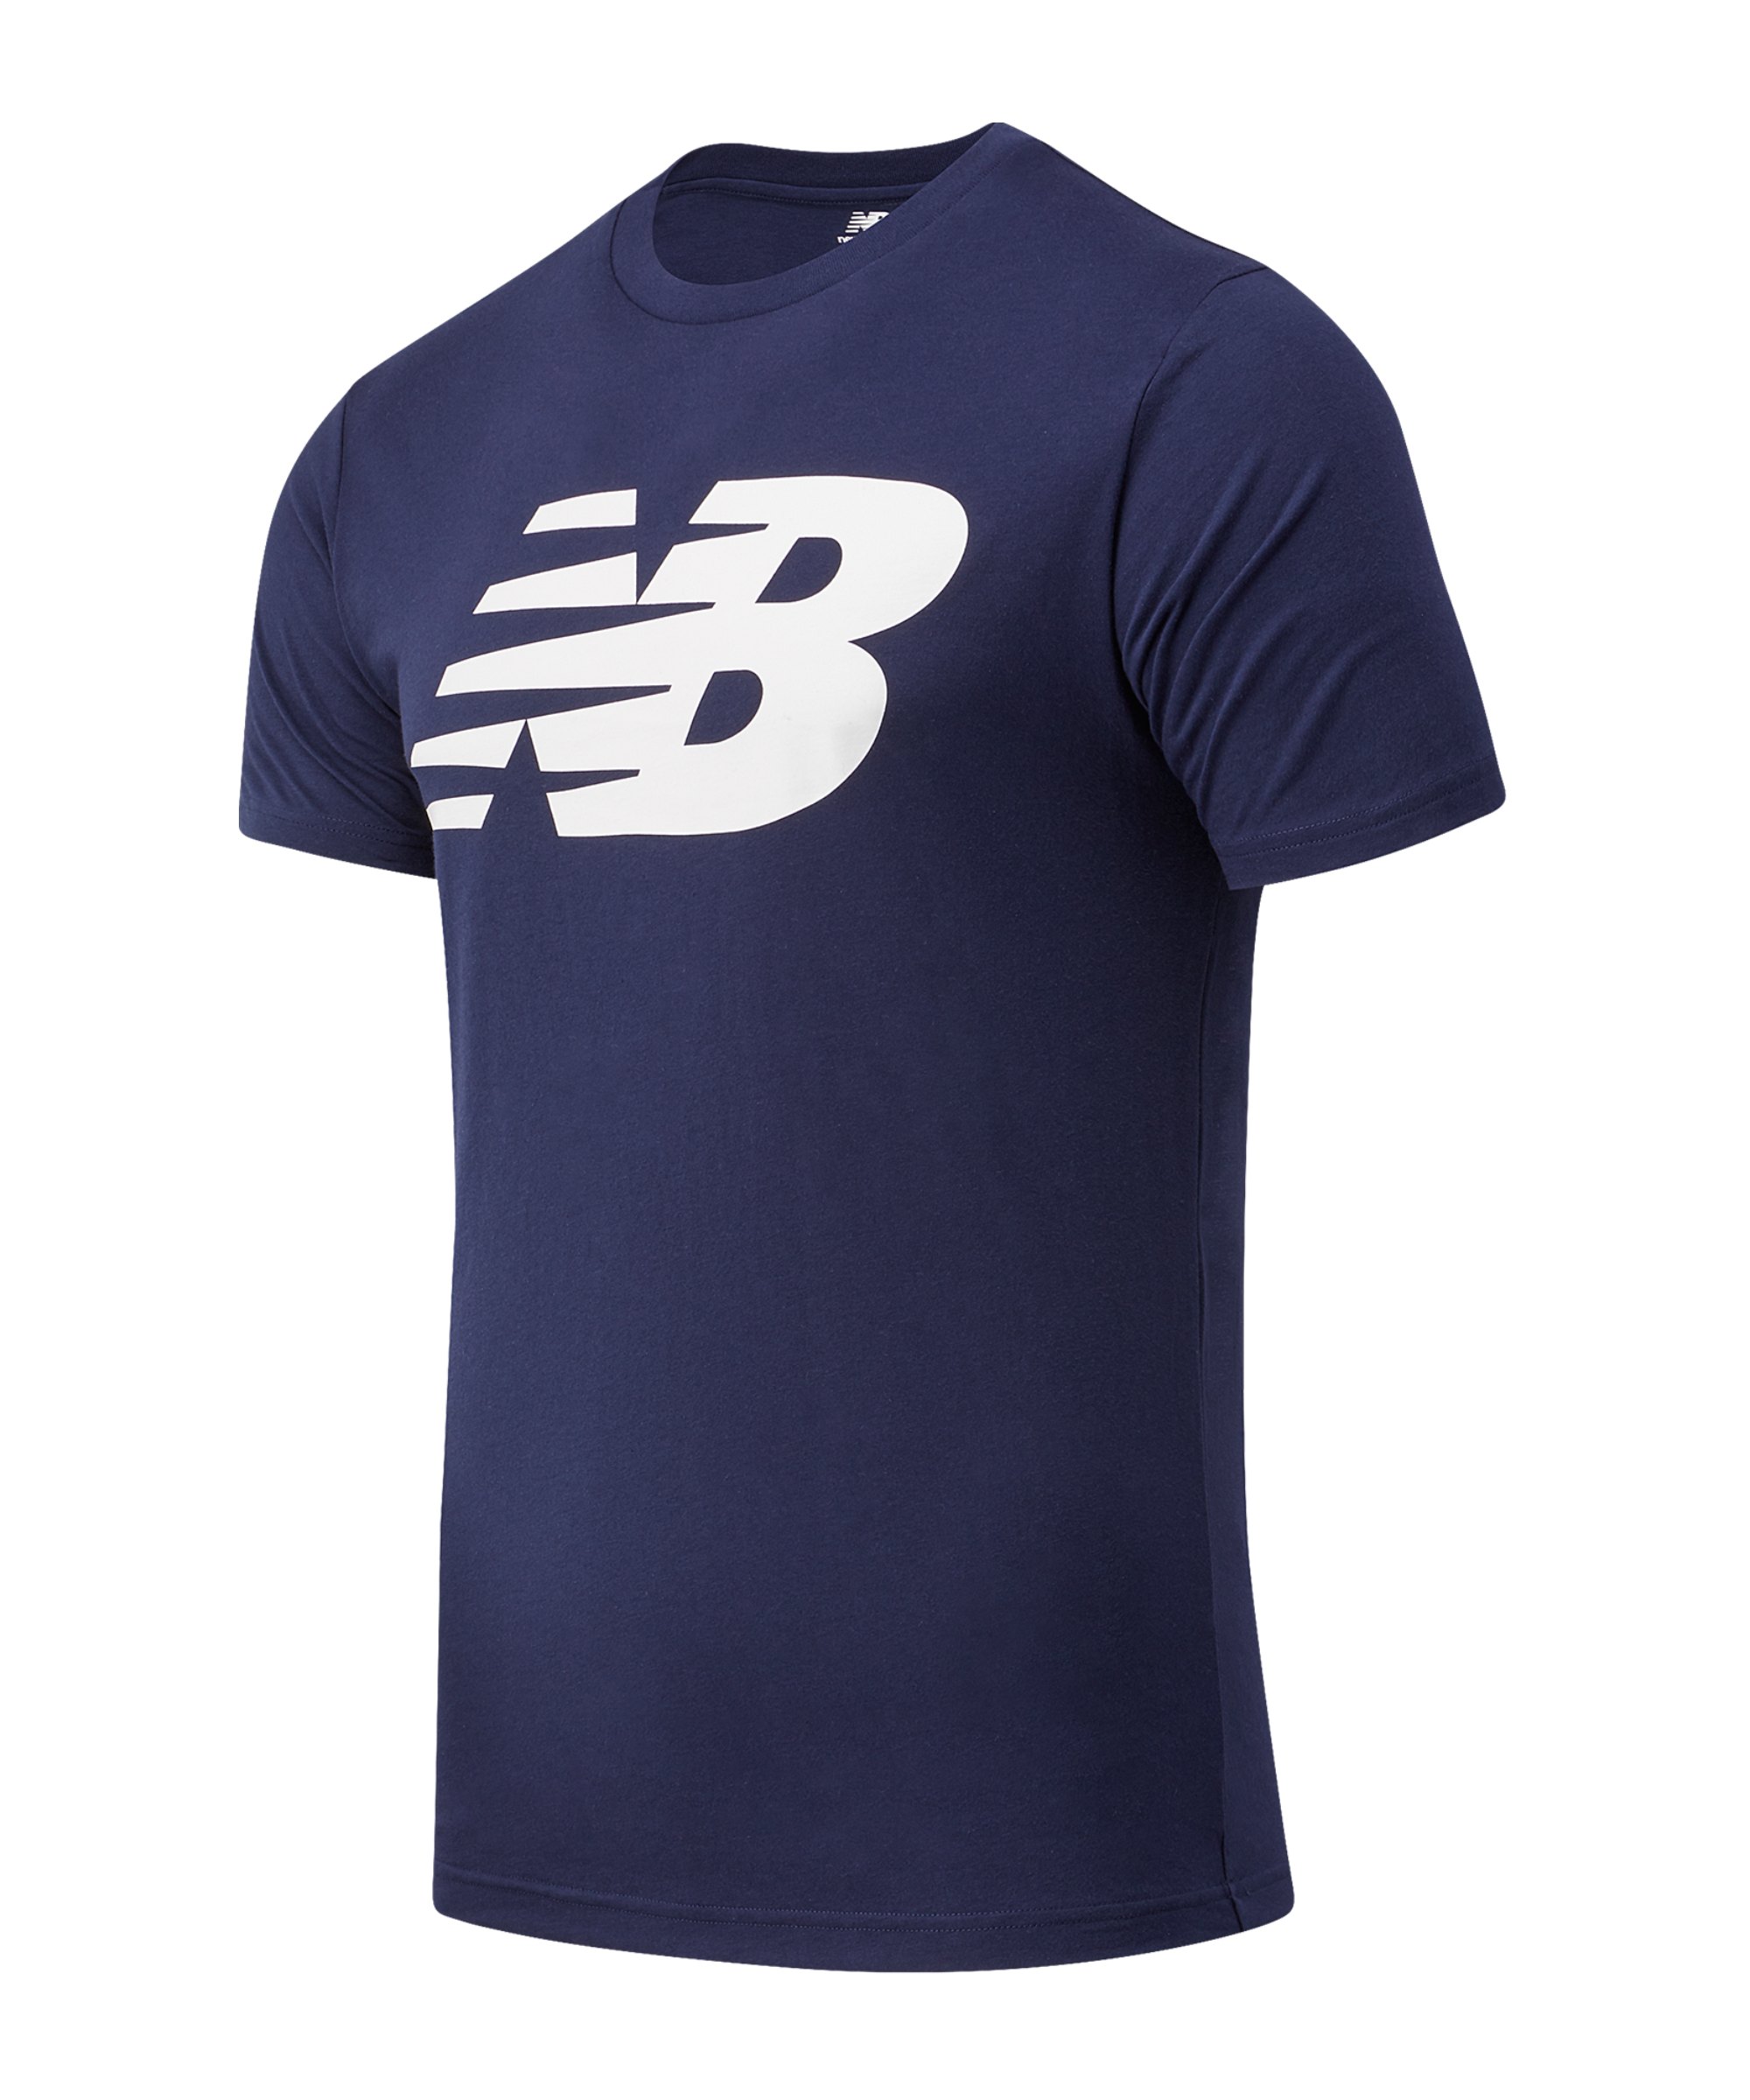 New Balance Classic T-Shirt Blau FPGM - blau